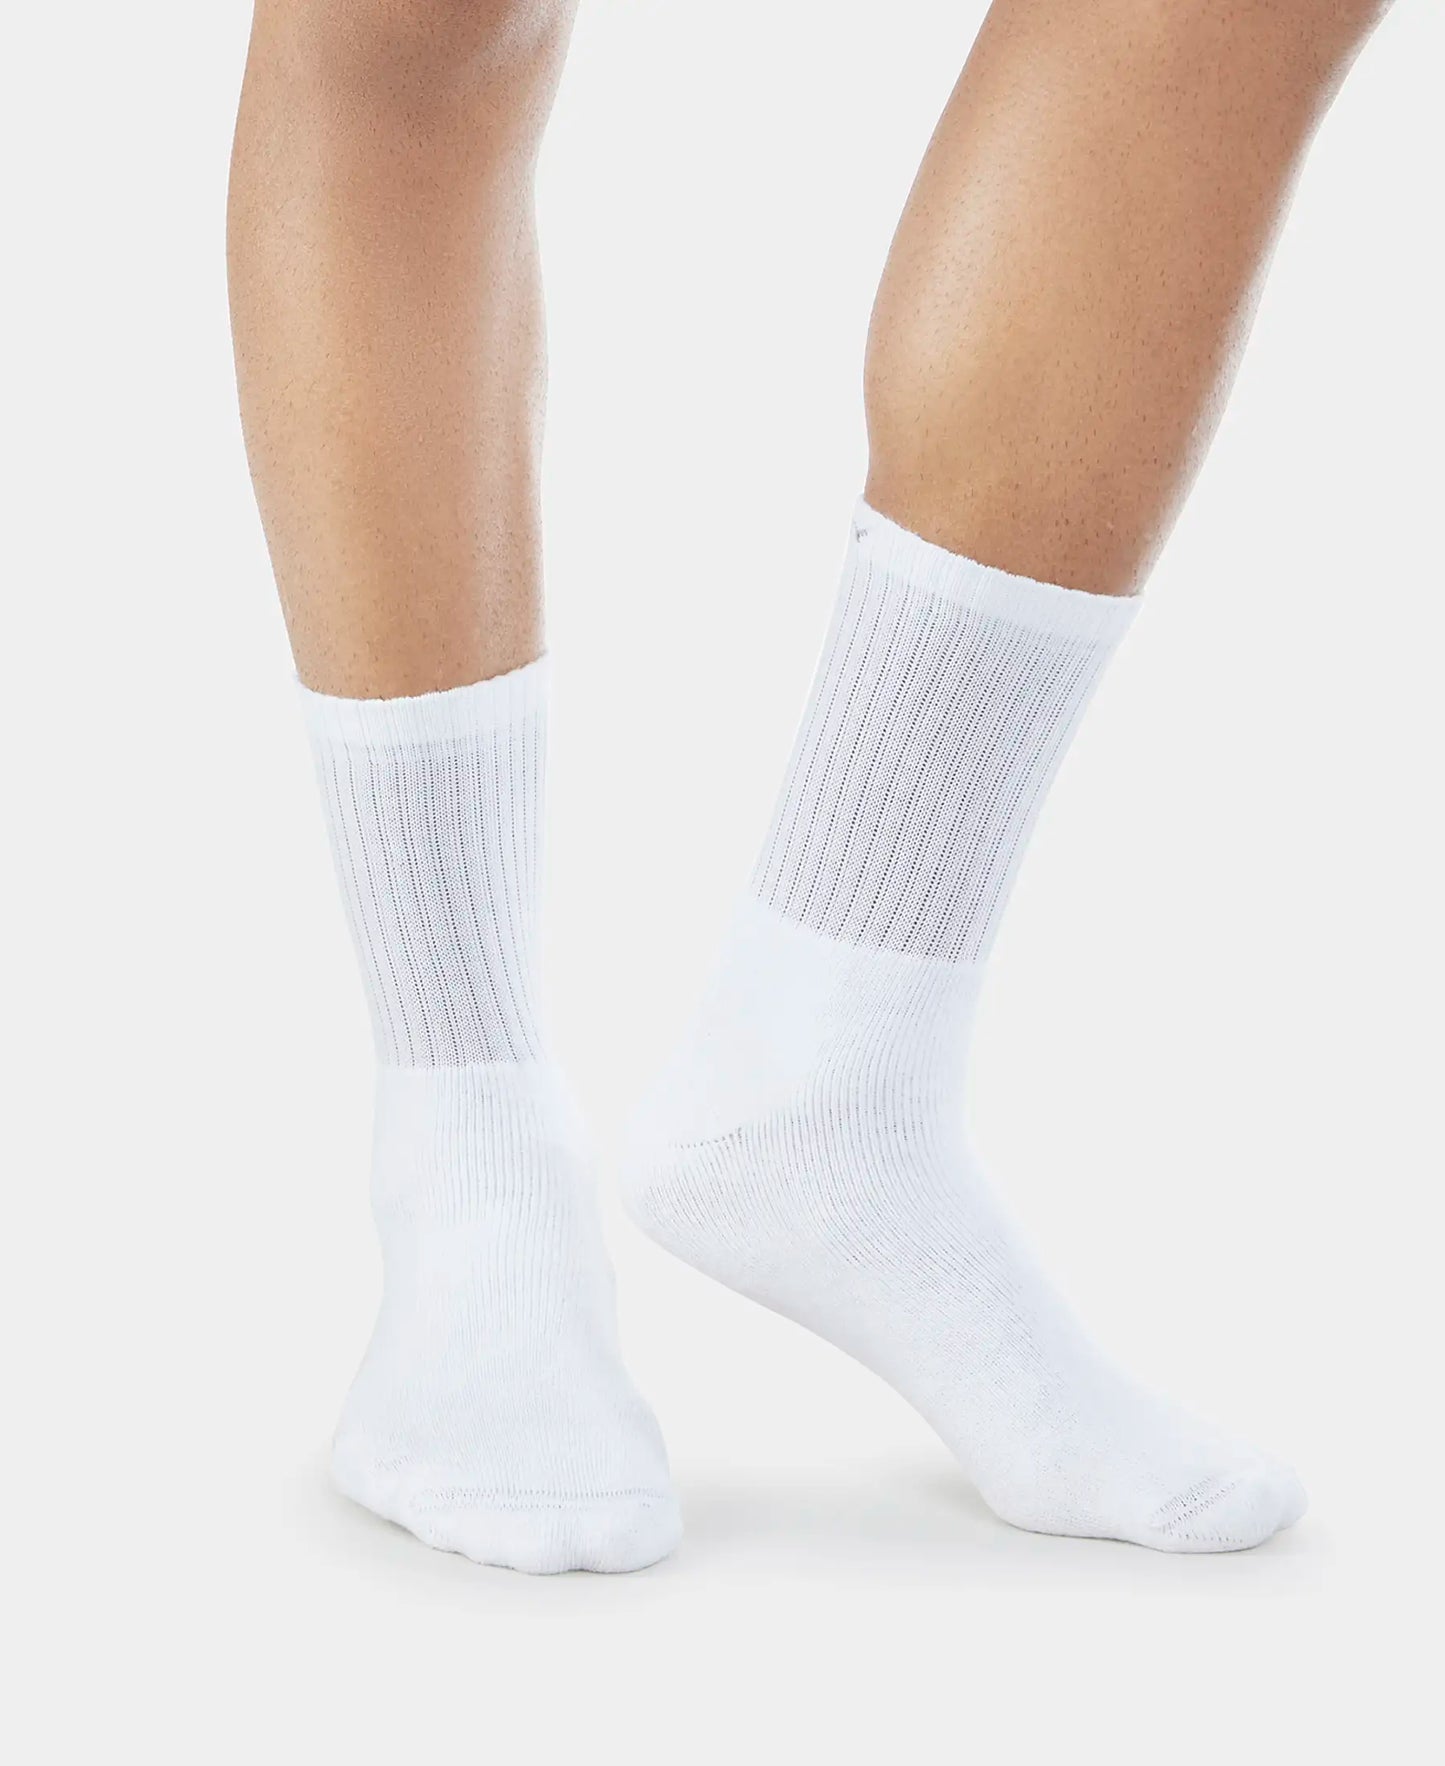 Modal Cotton Elastane Stretch Crew Length Socks with StayFresh Treatment - White